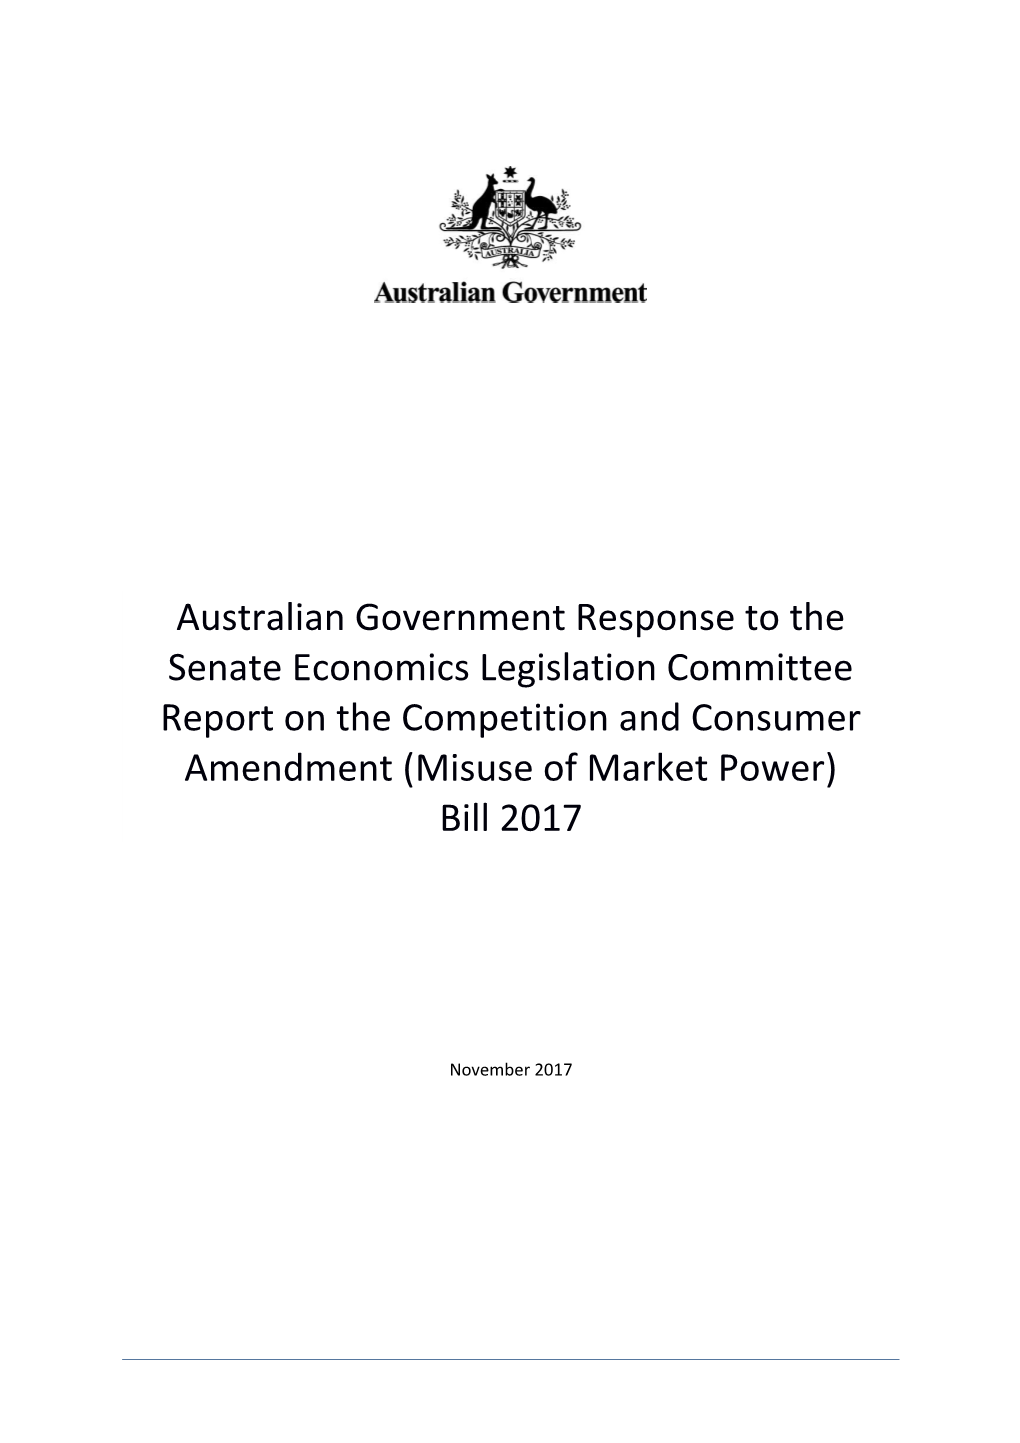 Australian Government Response to the Senate Economics Legislation Committee Report On